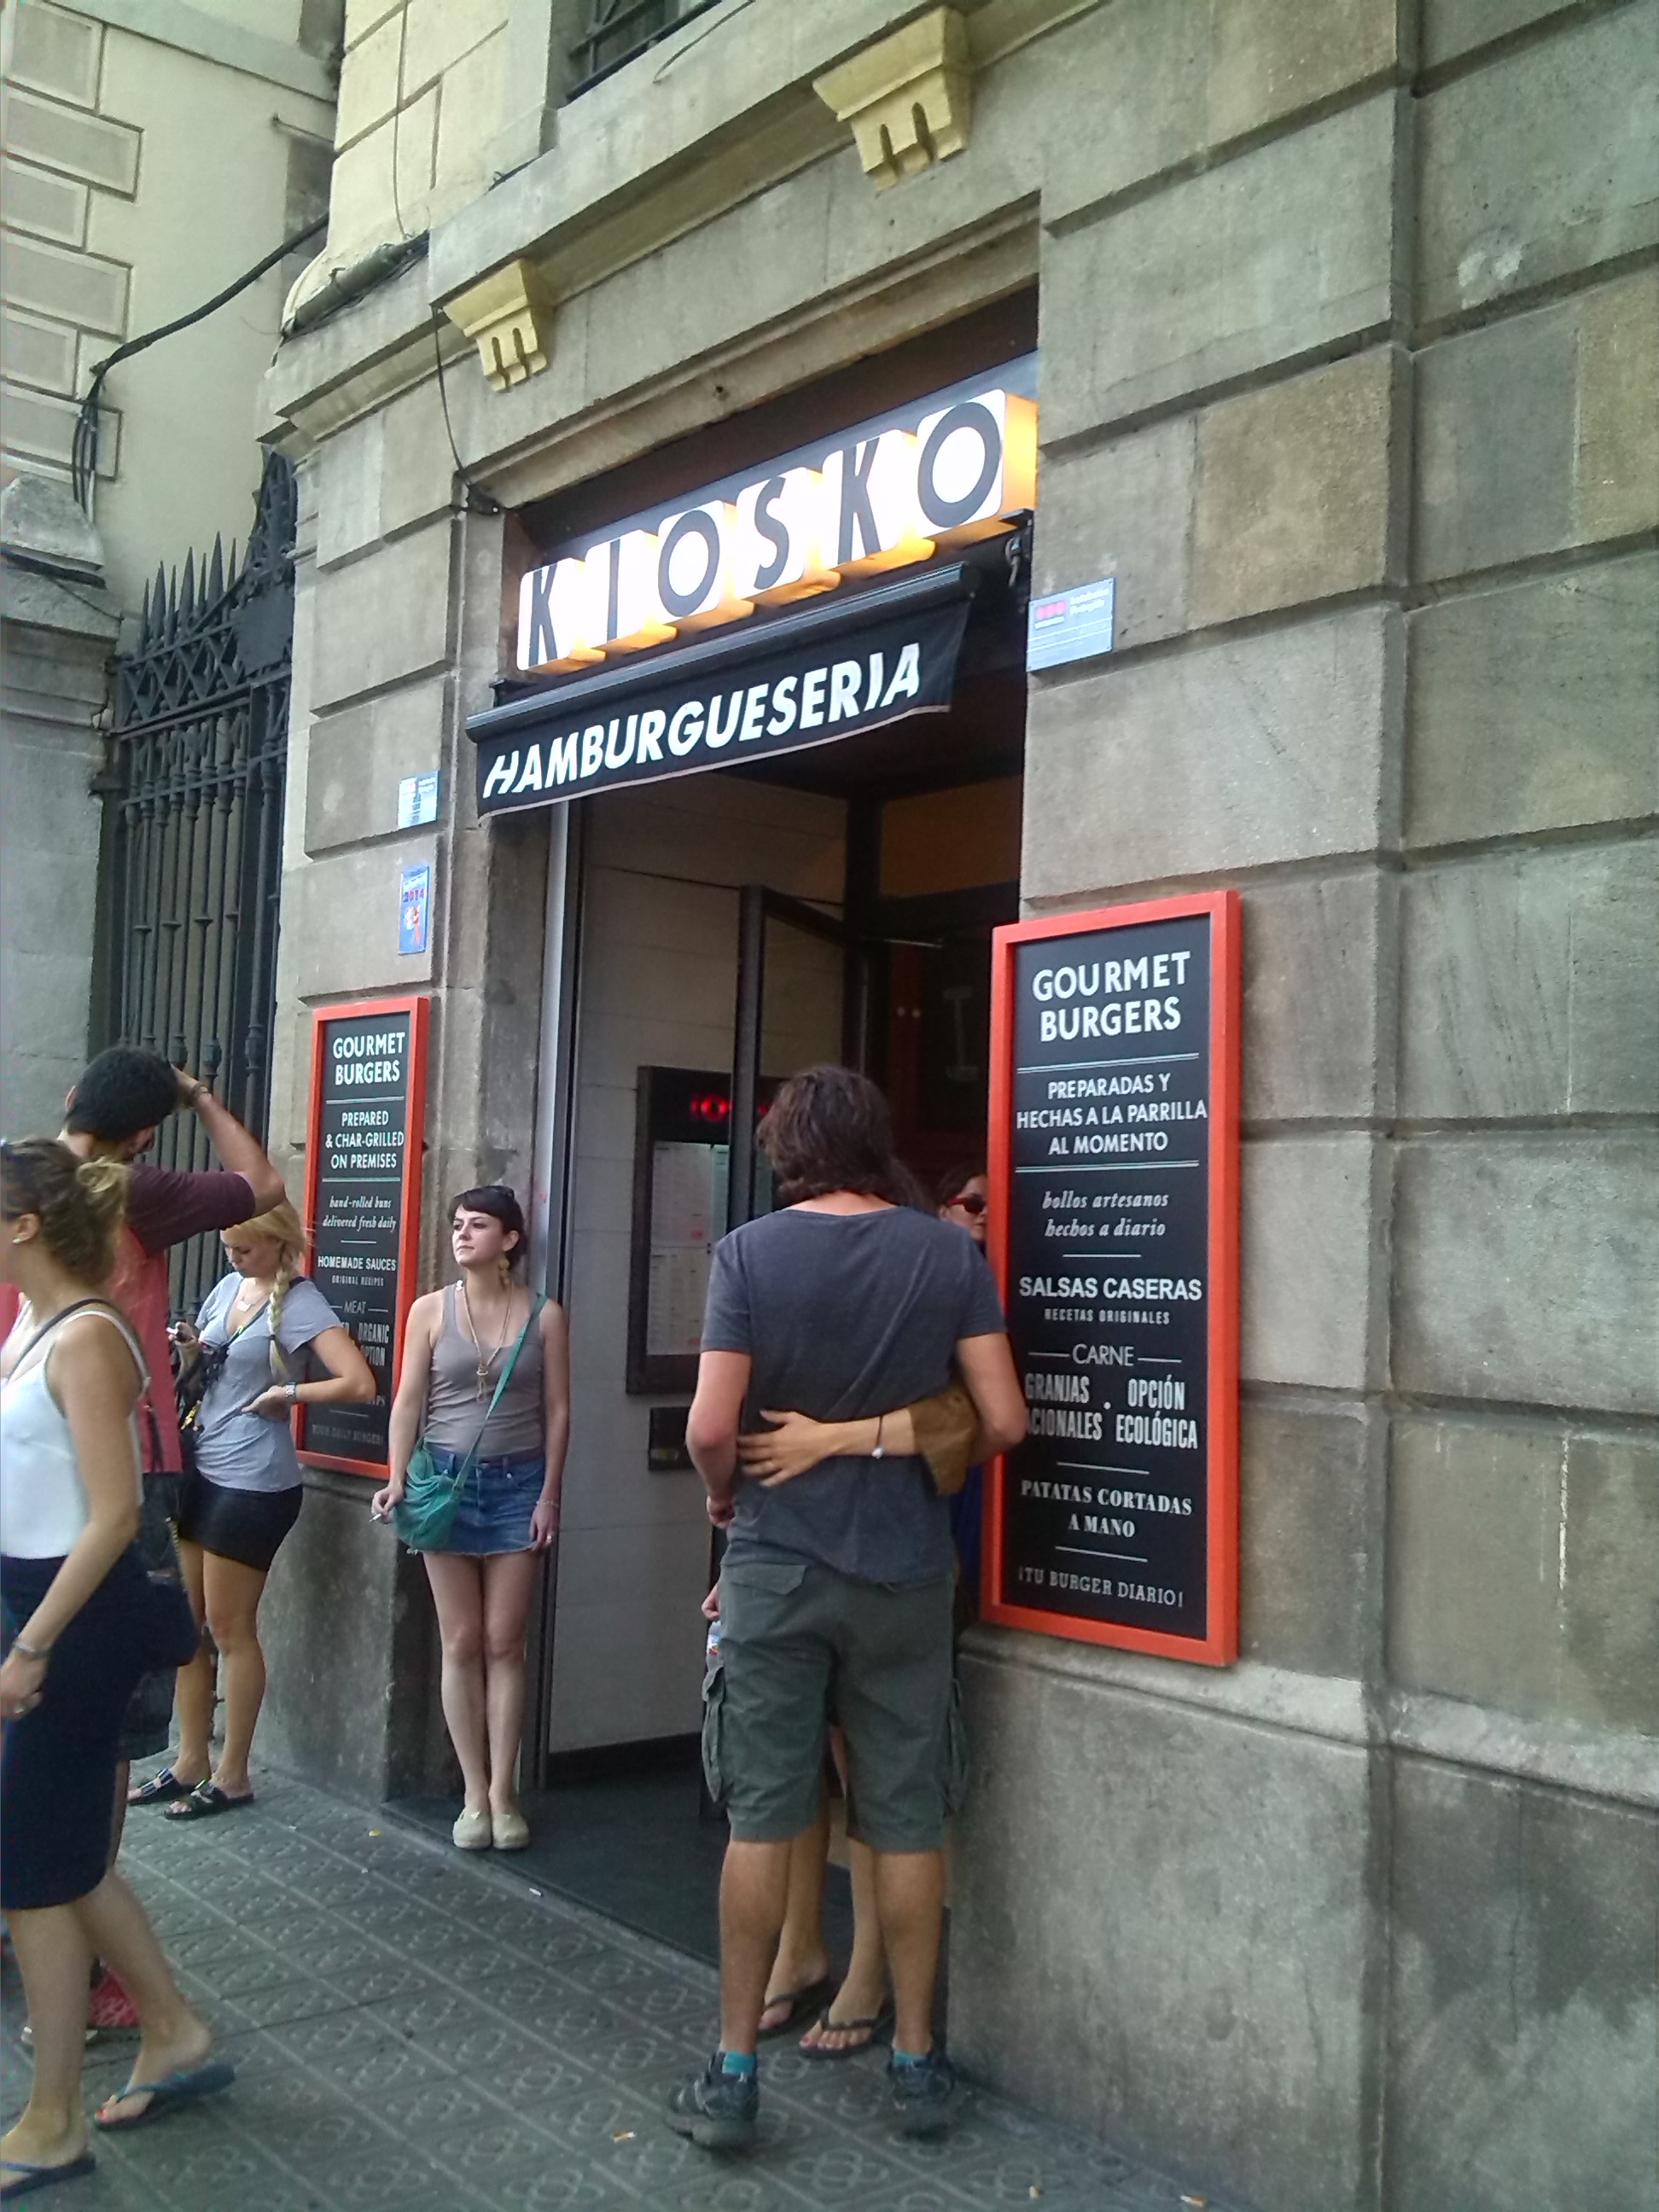 Kiosko, hamburguesería en Barcelona